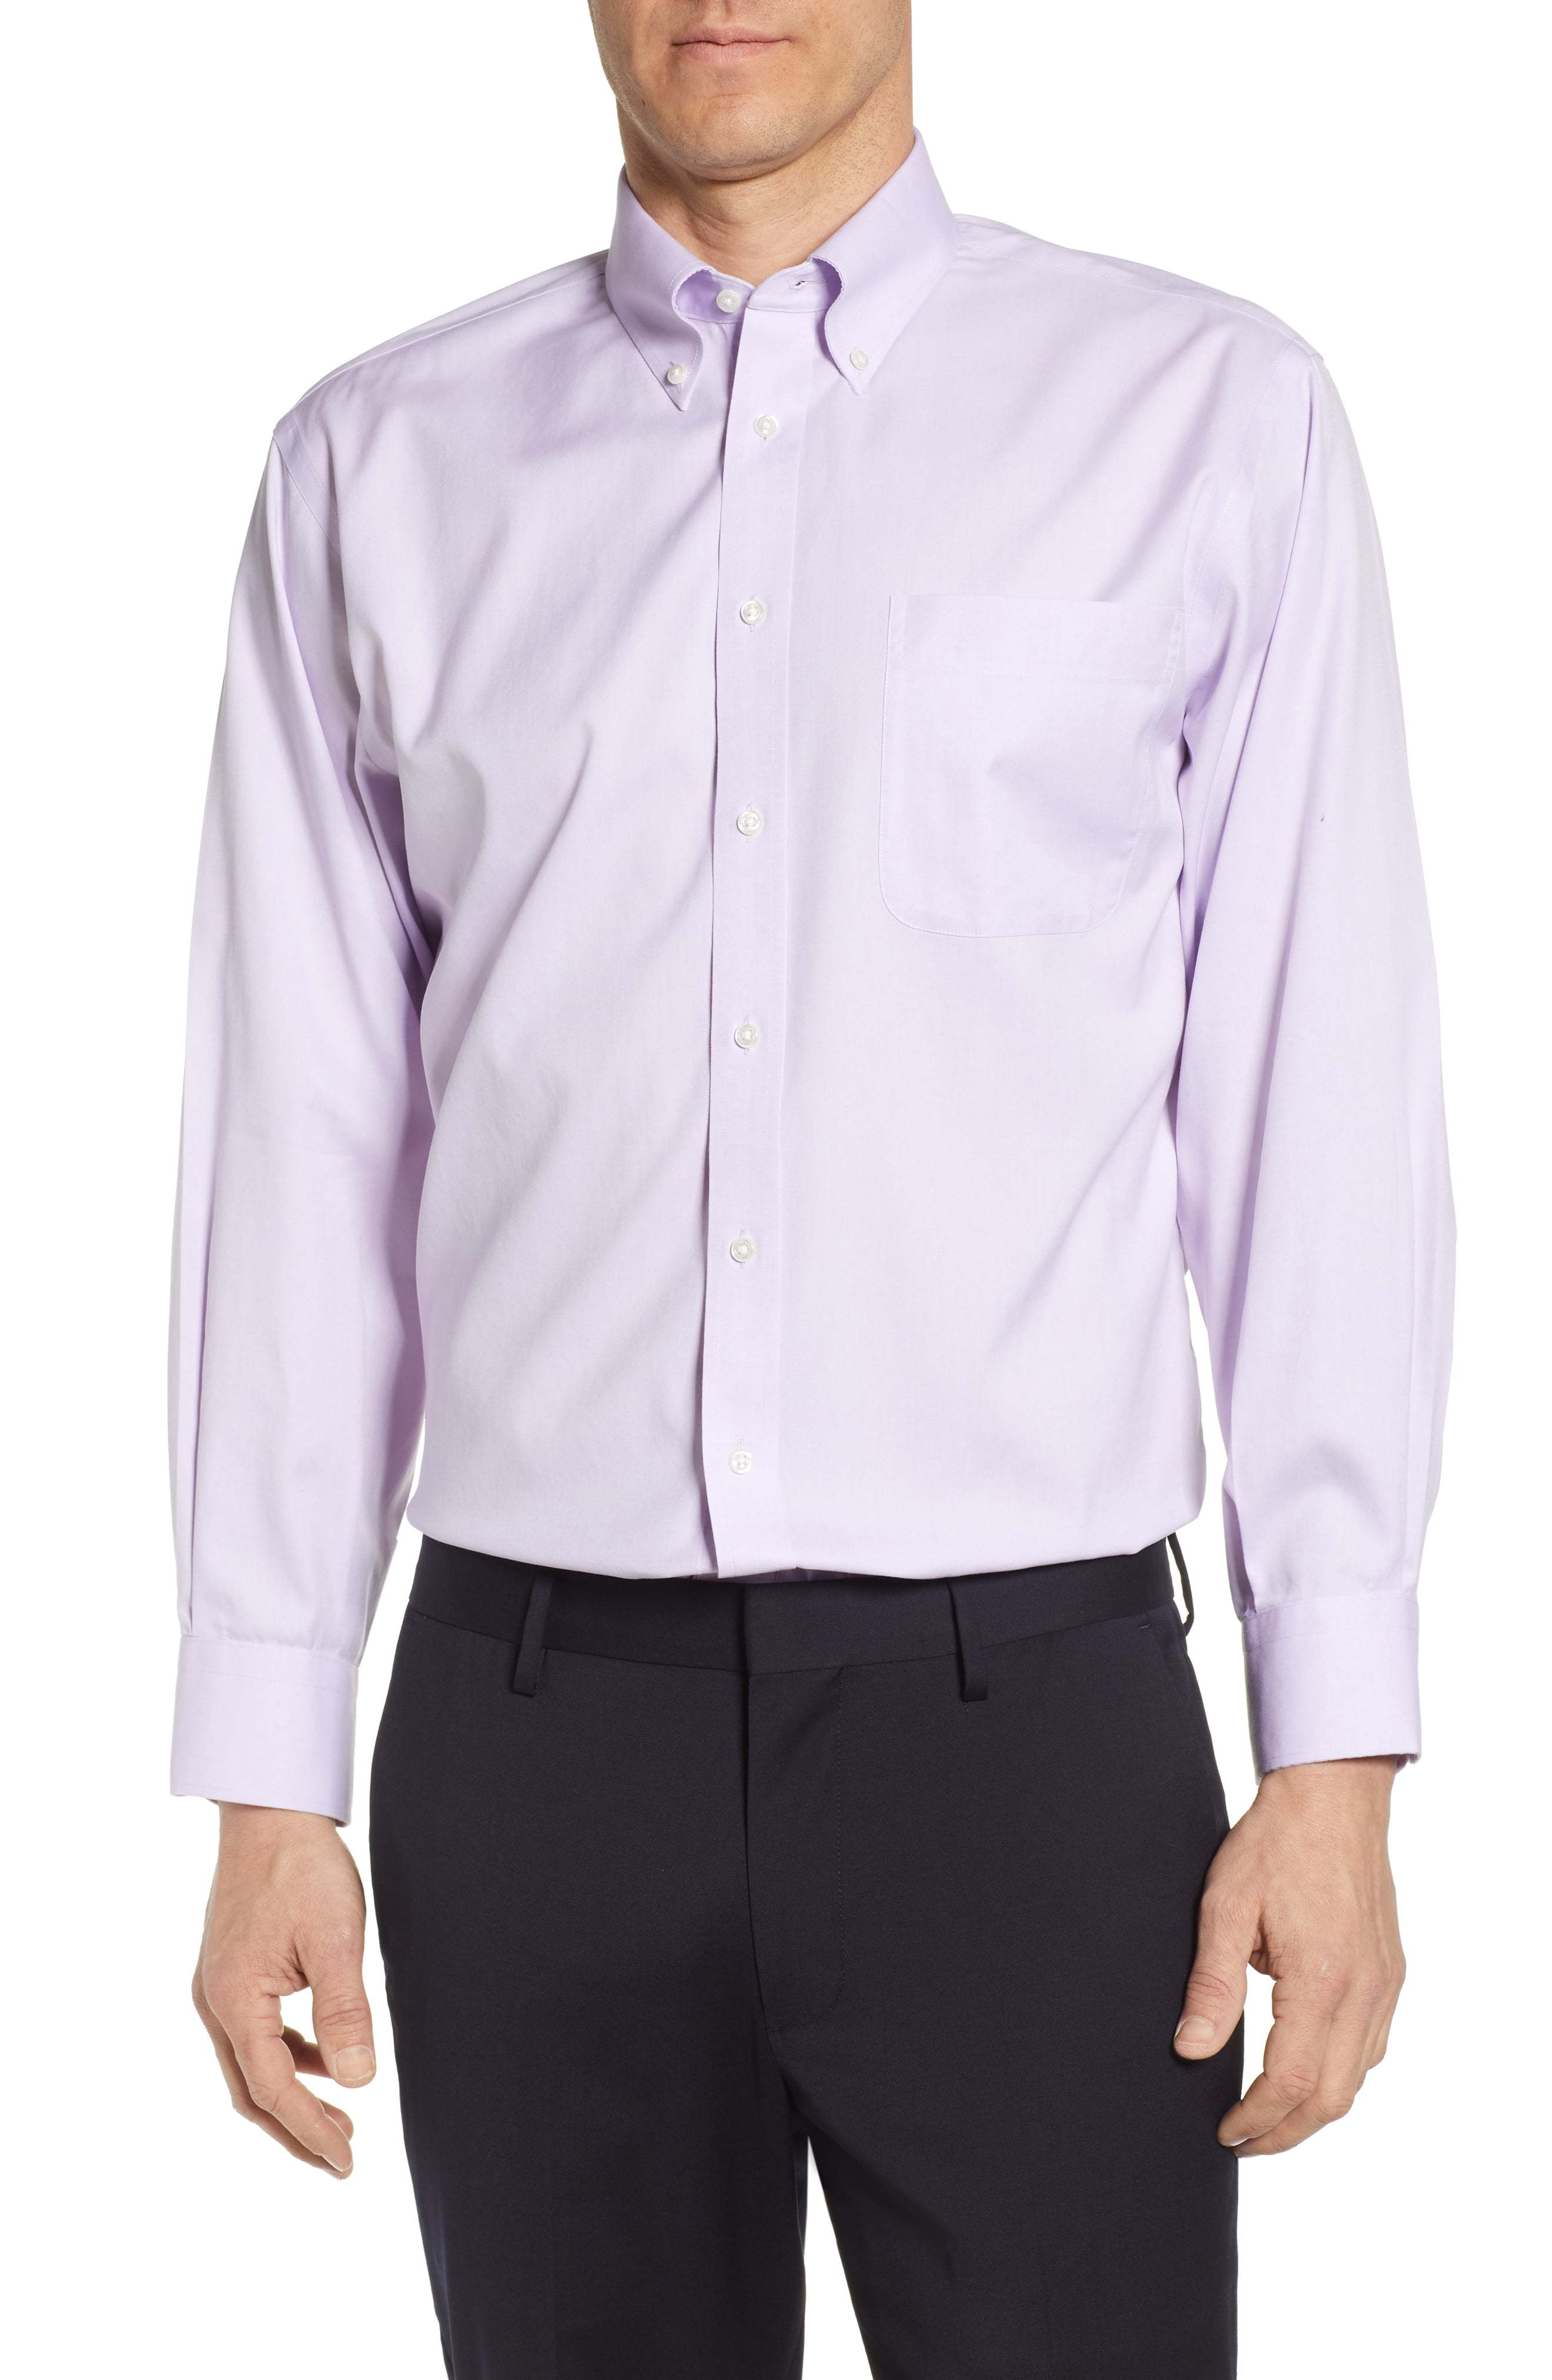 Nordstrom Men's Shop Smartcare Classic Fit Dress Shirt, $59 | Nordstrom ...